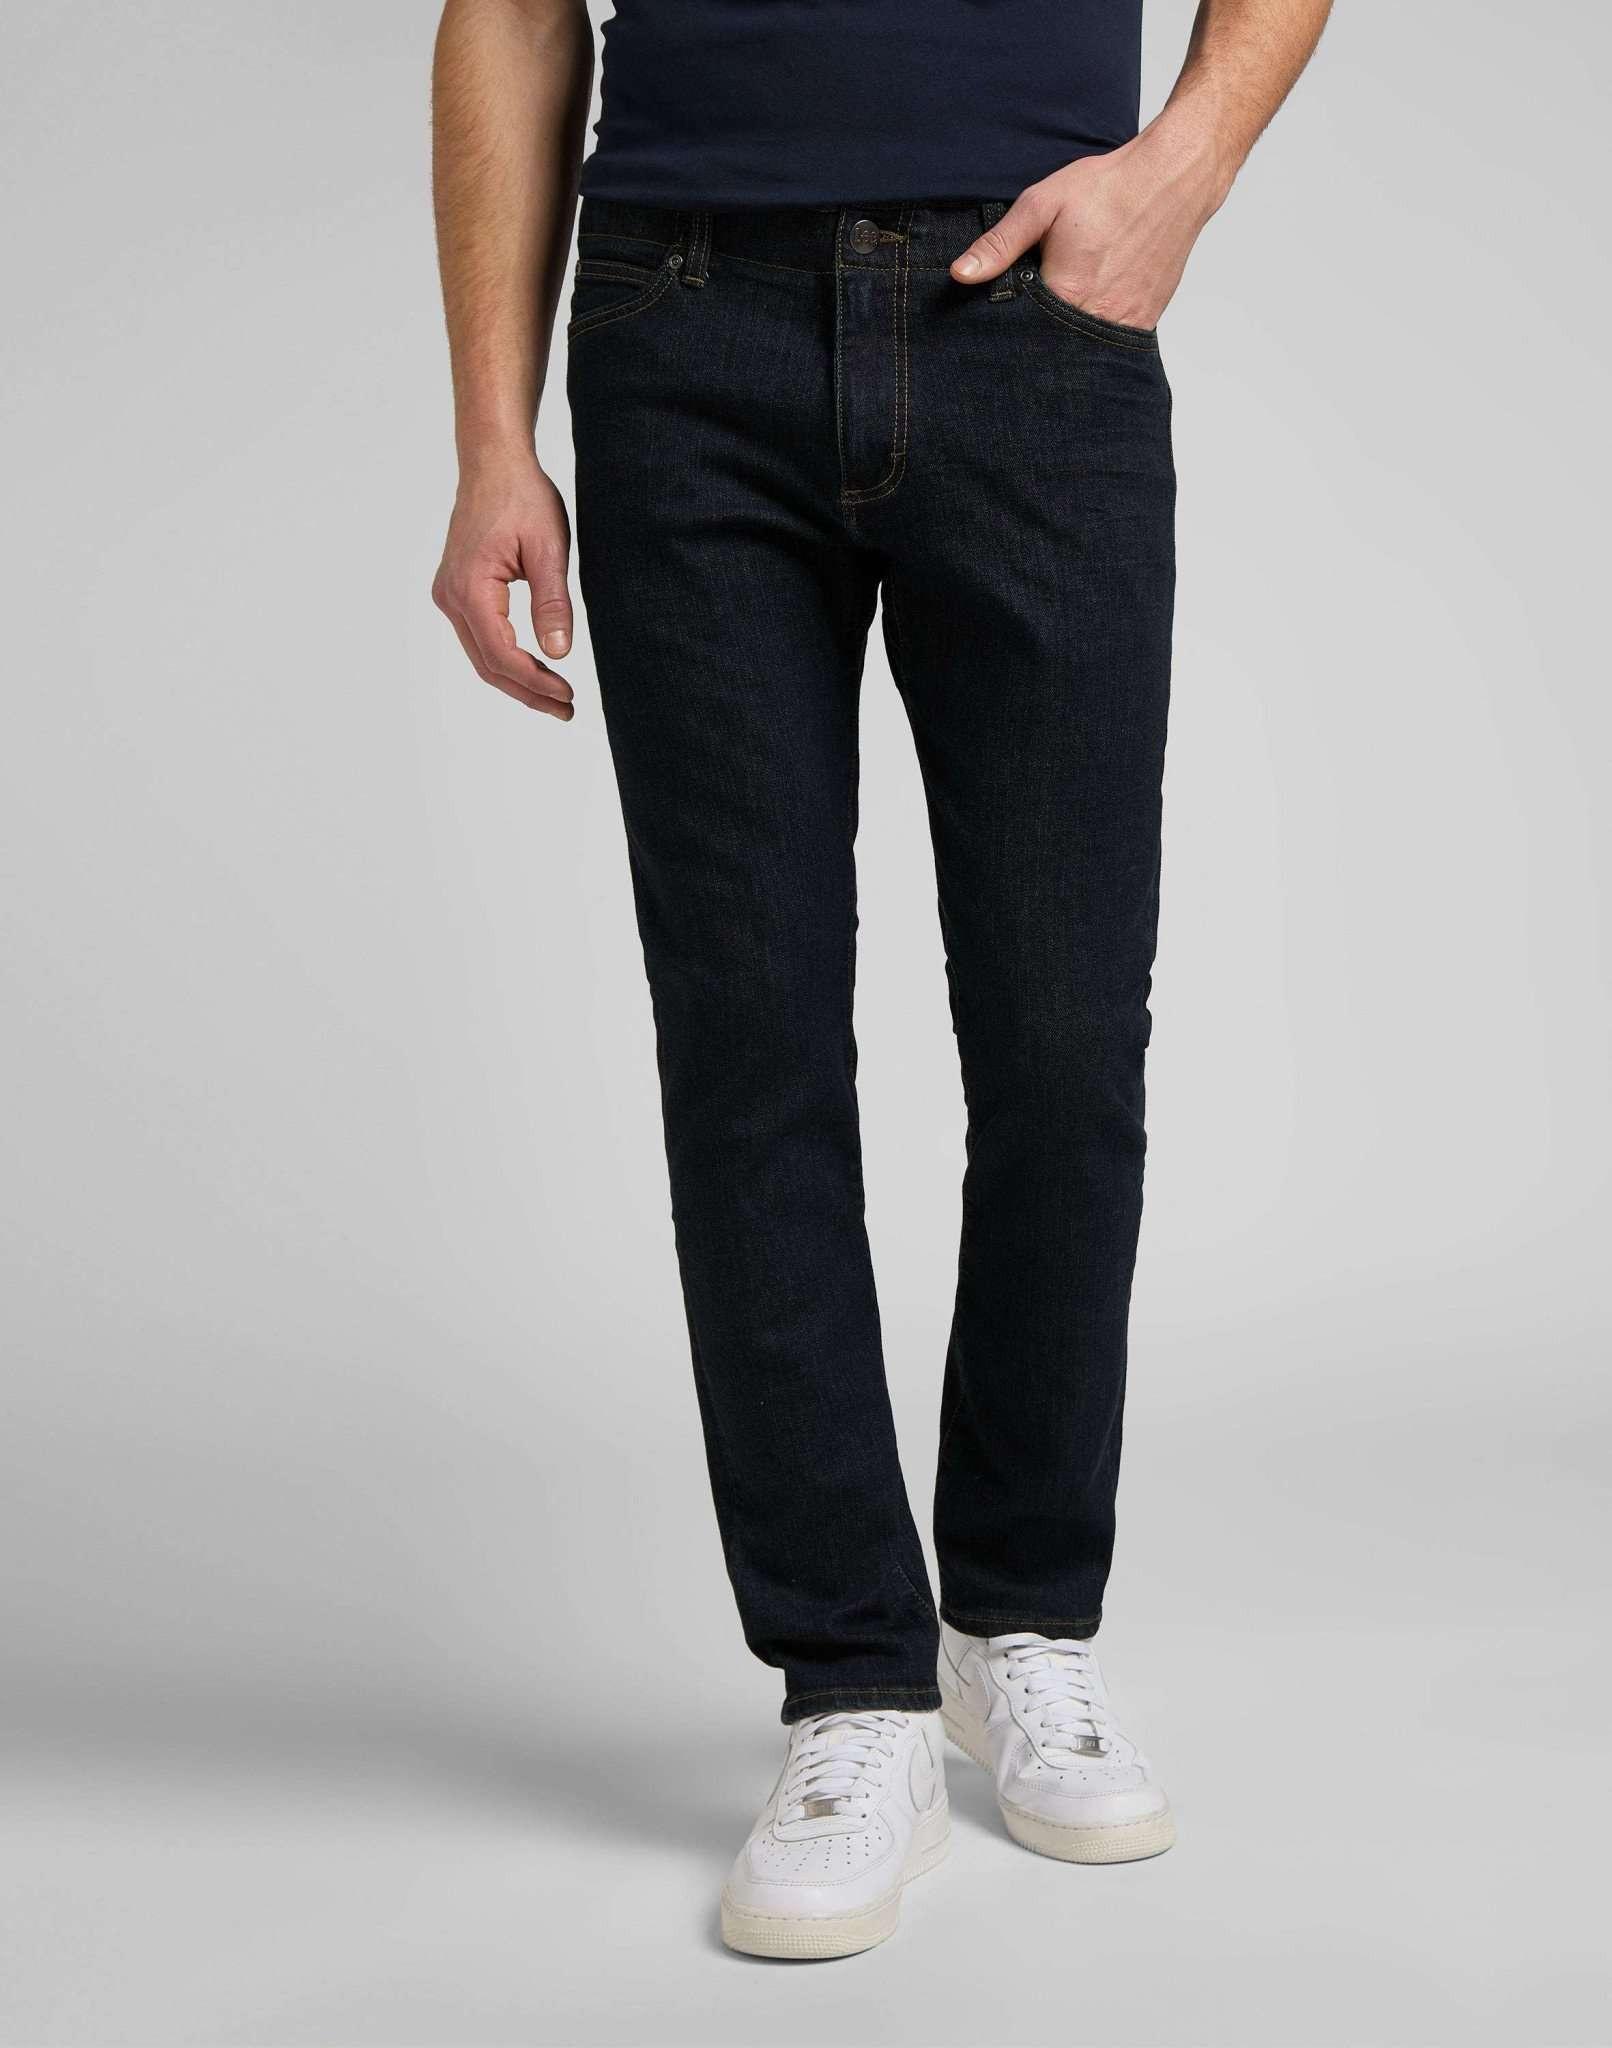 Jeans Skinny Fit Xm Herren Blau Denim L34/W38 von Lee